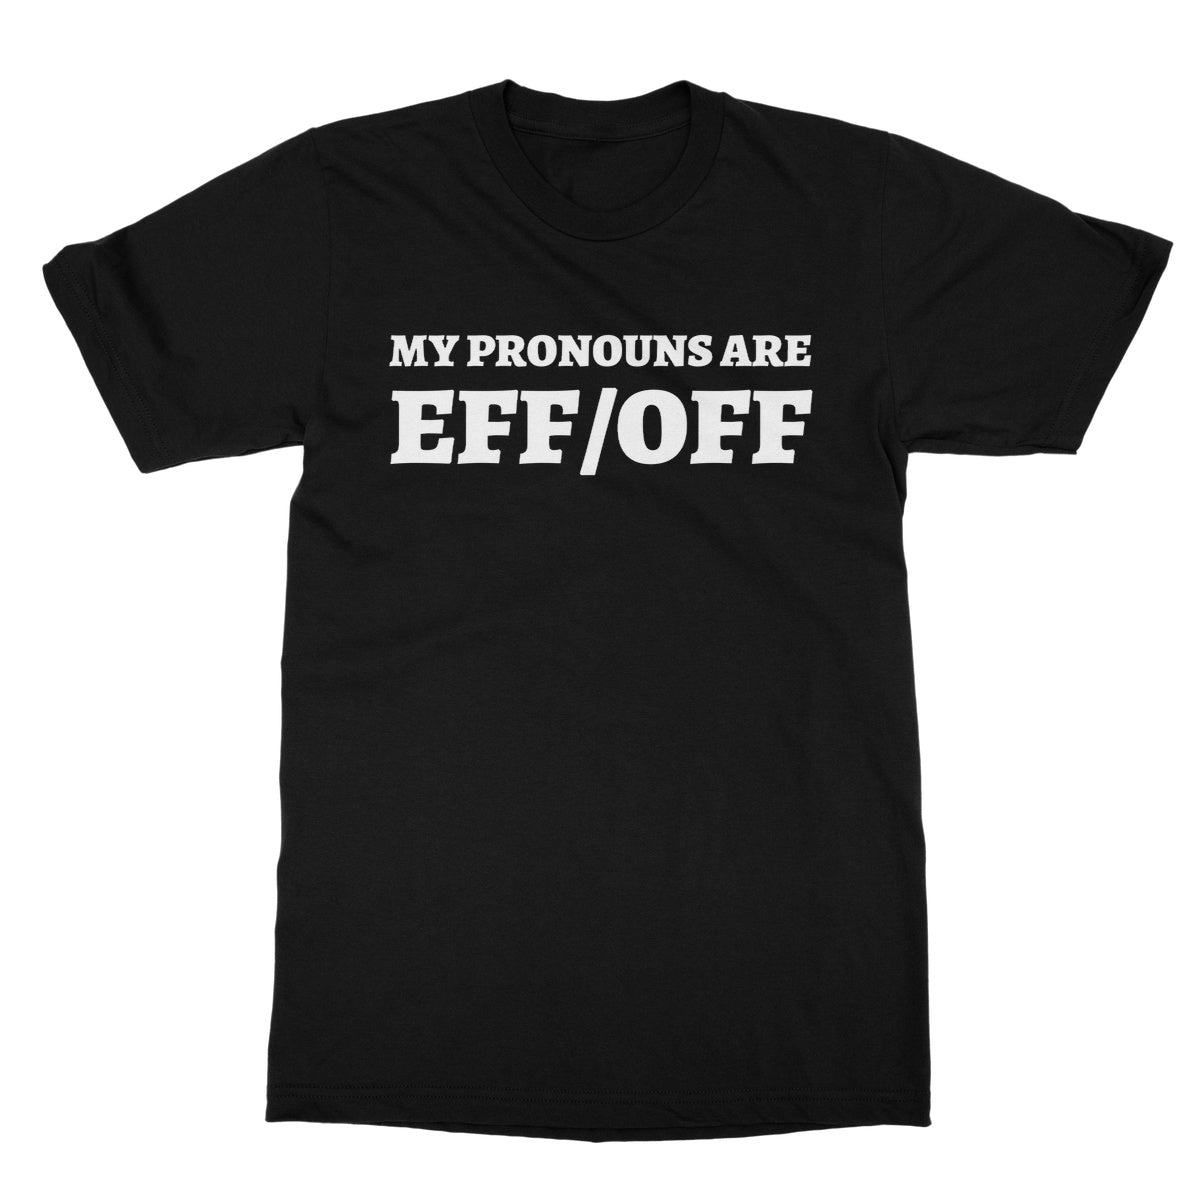 eff off t shirt black